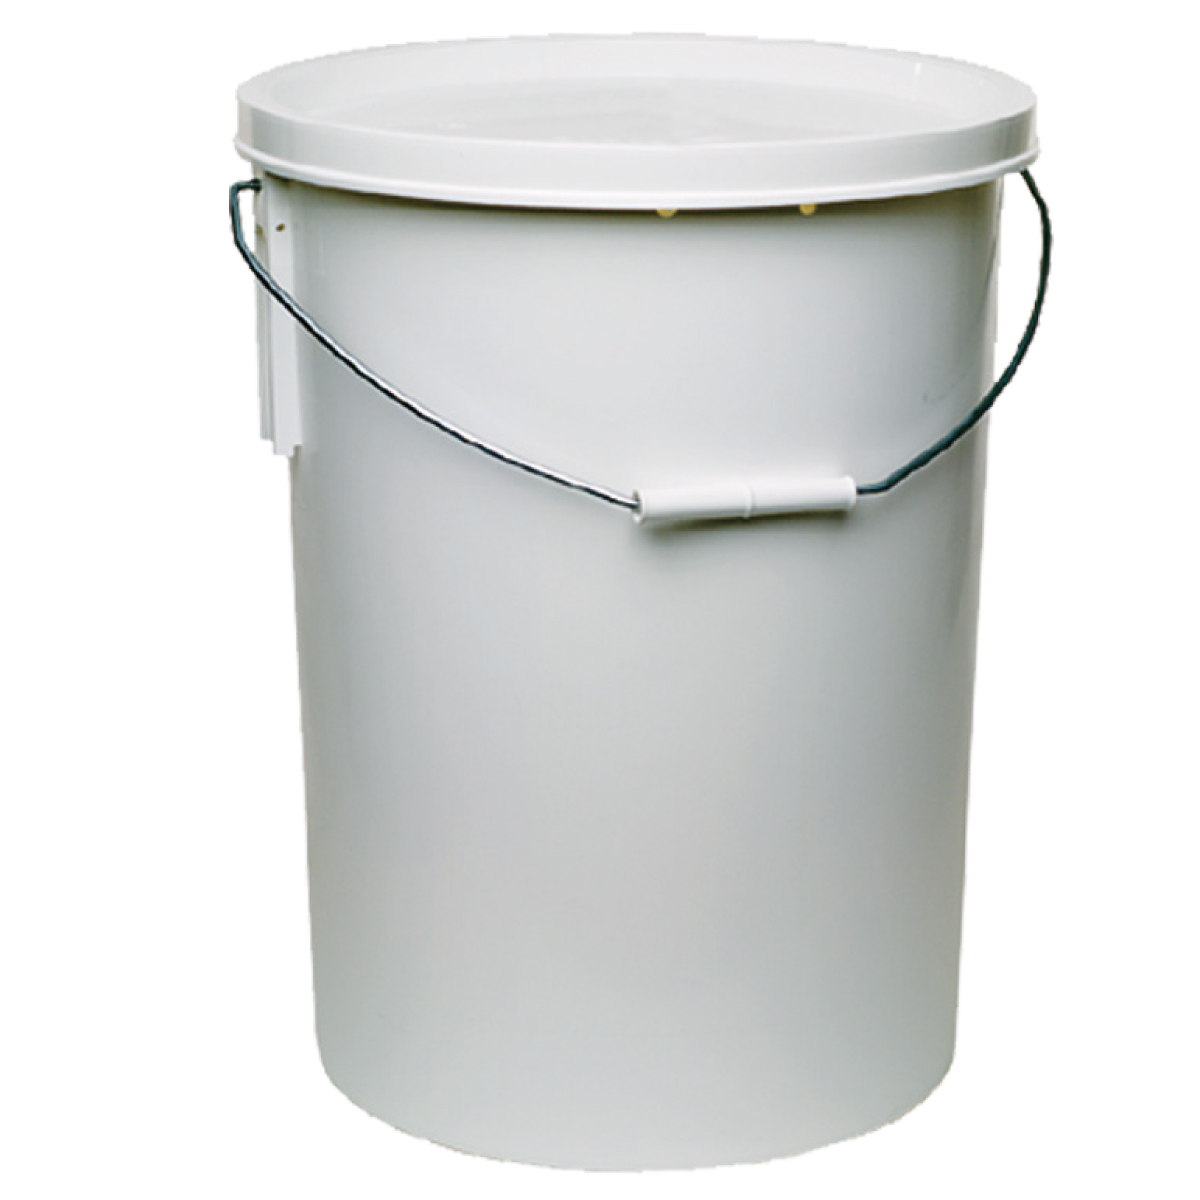 Storage container 27 liters (7.1 USgal.)